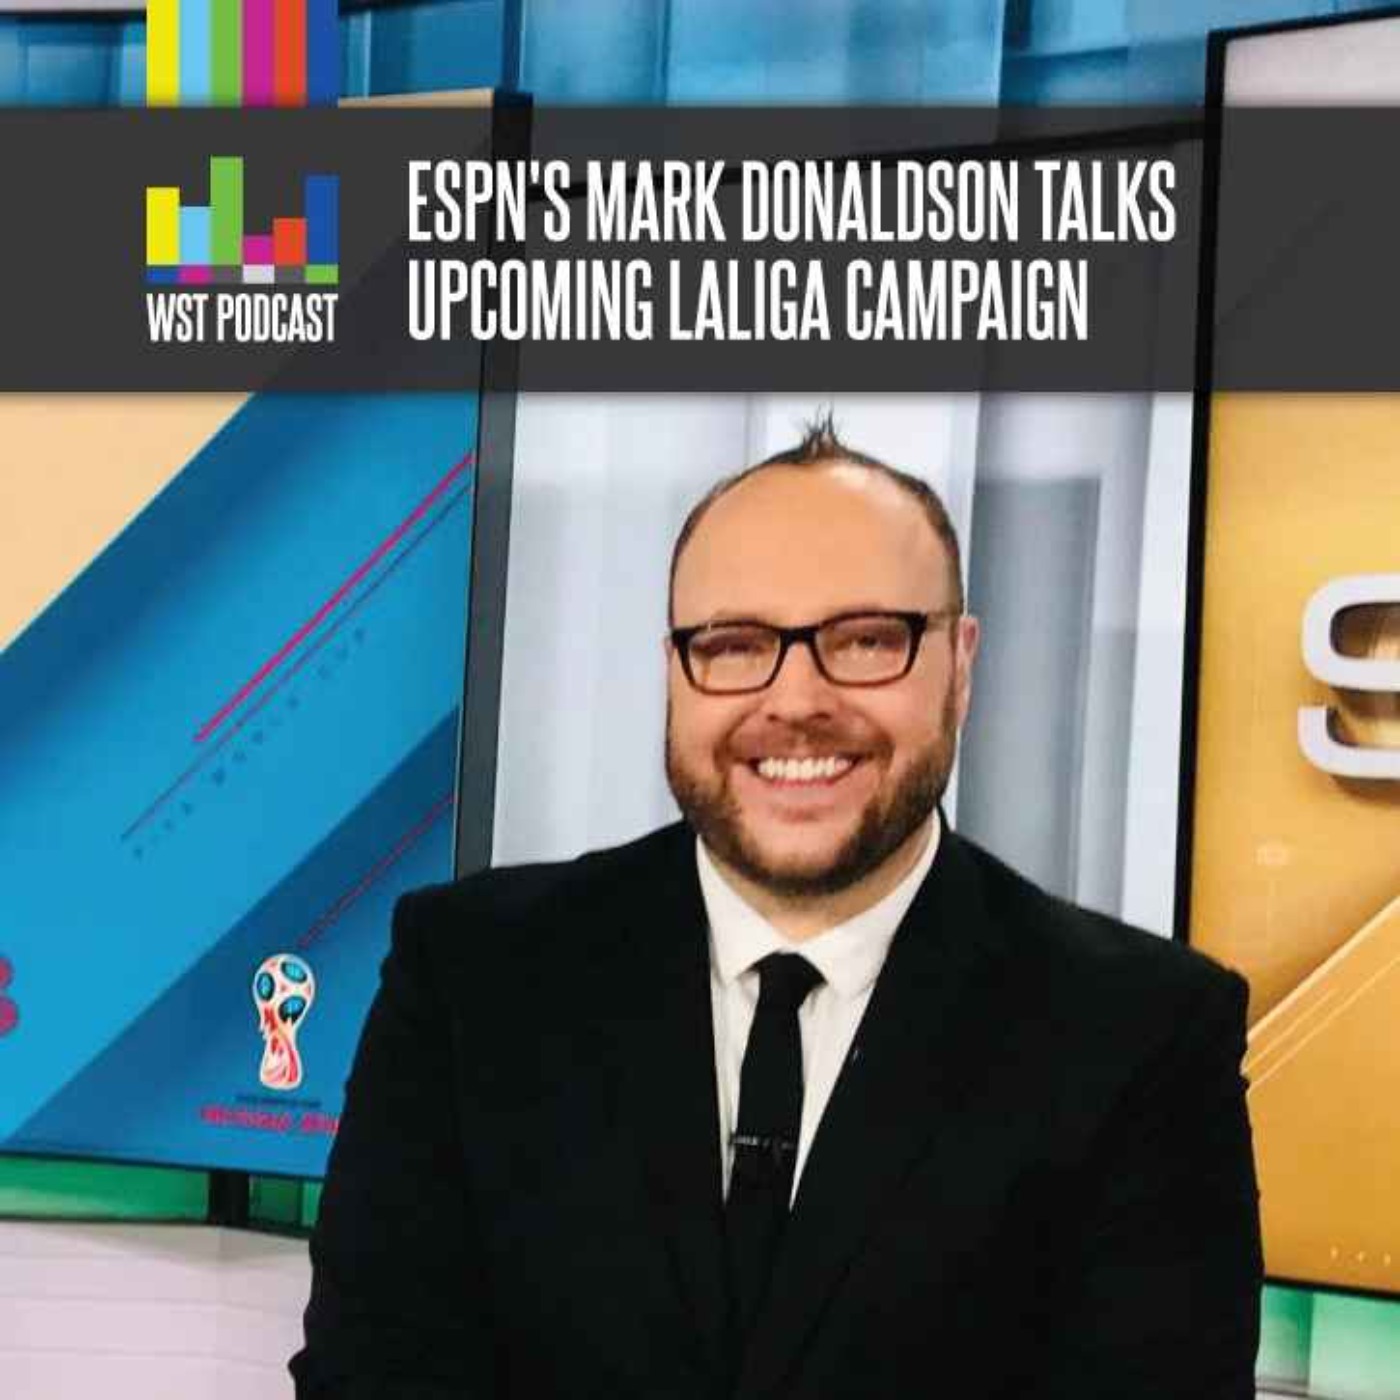 LaLiga campaign with ESPN's Mark Donaldson